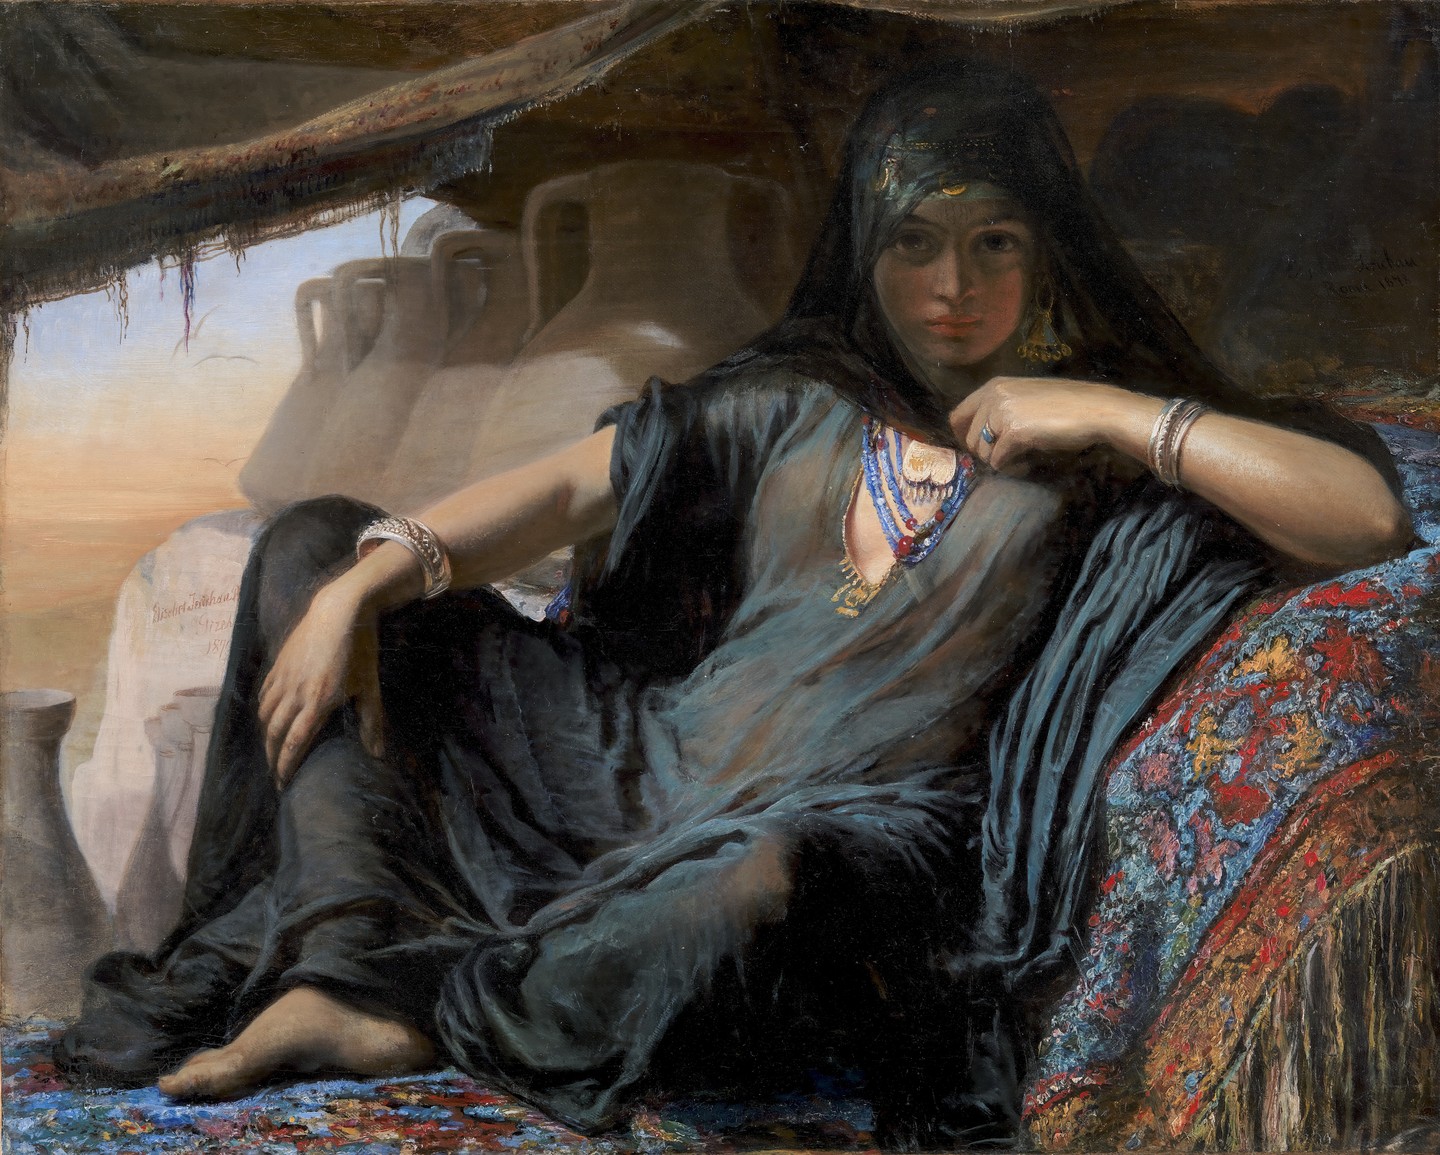 Elisabeth Jerichau Baumann, "An Egyptian Pot Seller at Giza", 1876-1878, SMK - National Gallery of Denmark